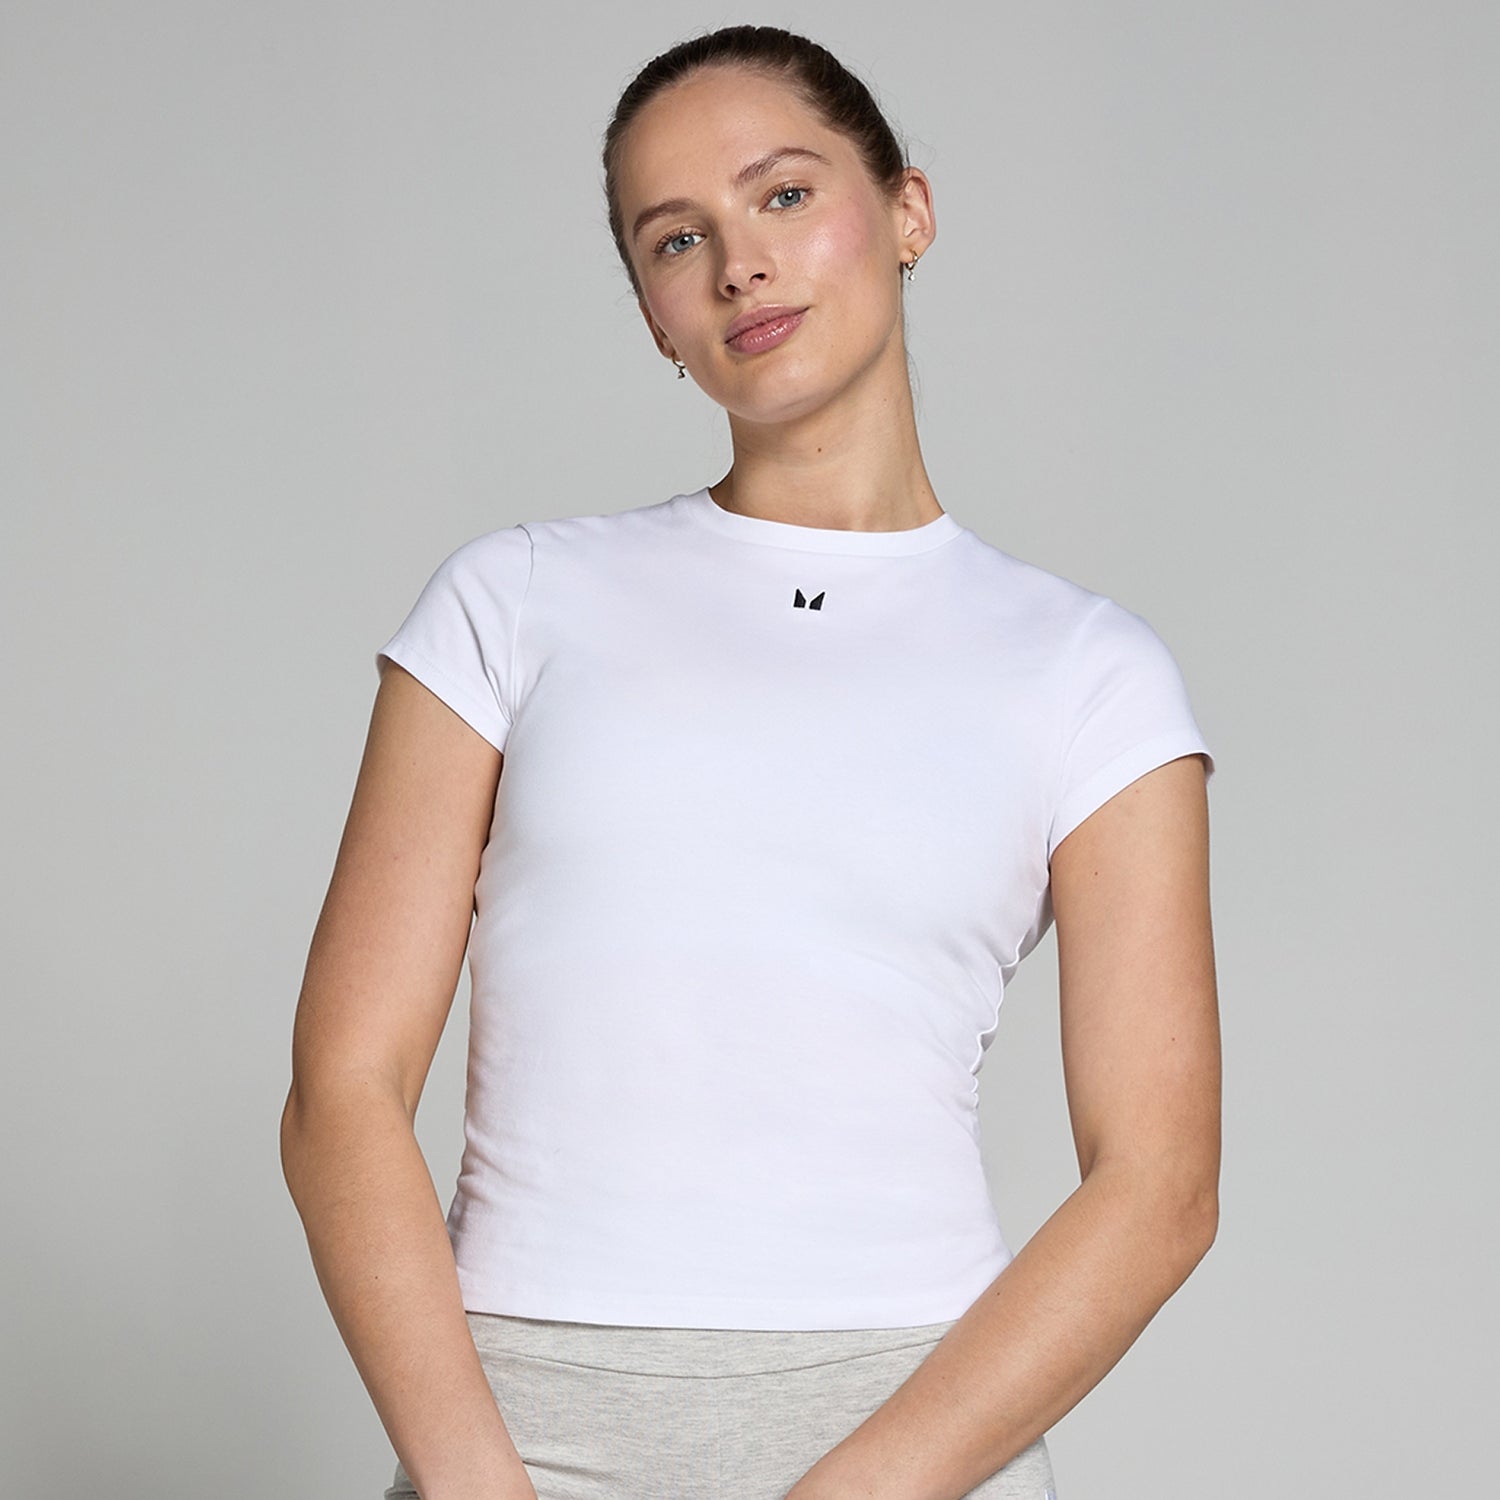 MP Women's Basic Body Fit Short Sleeve T-Shirt - White - XXS